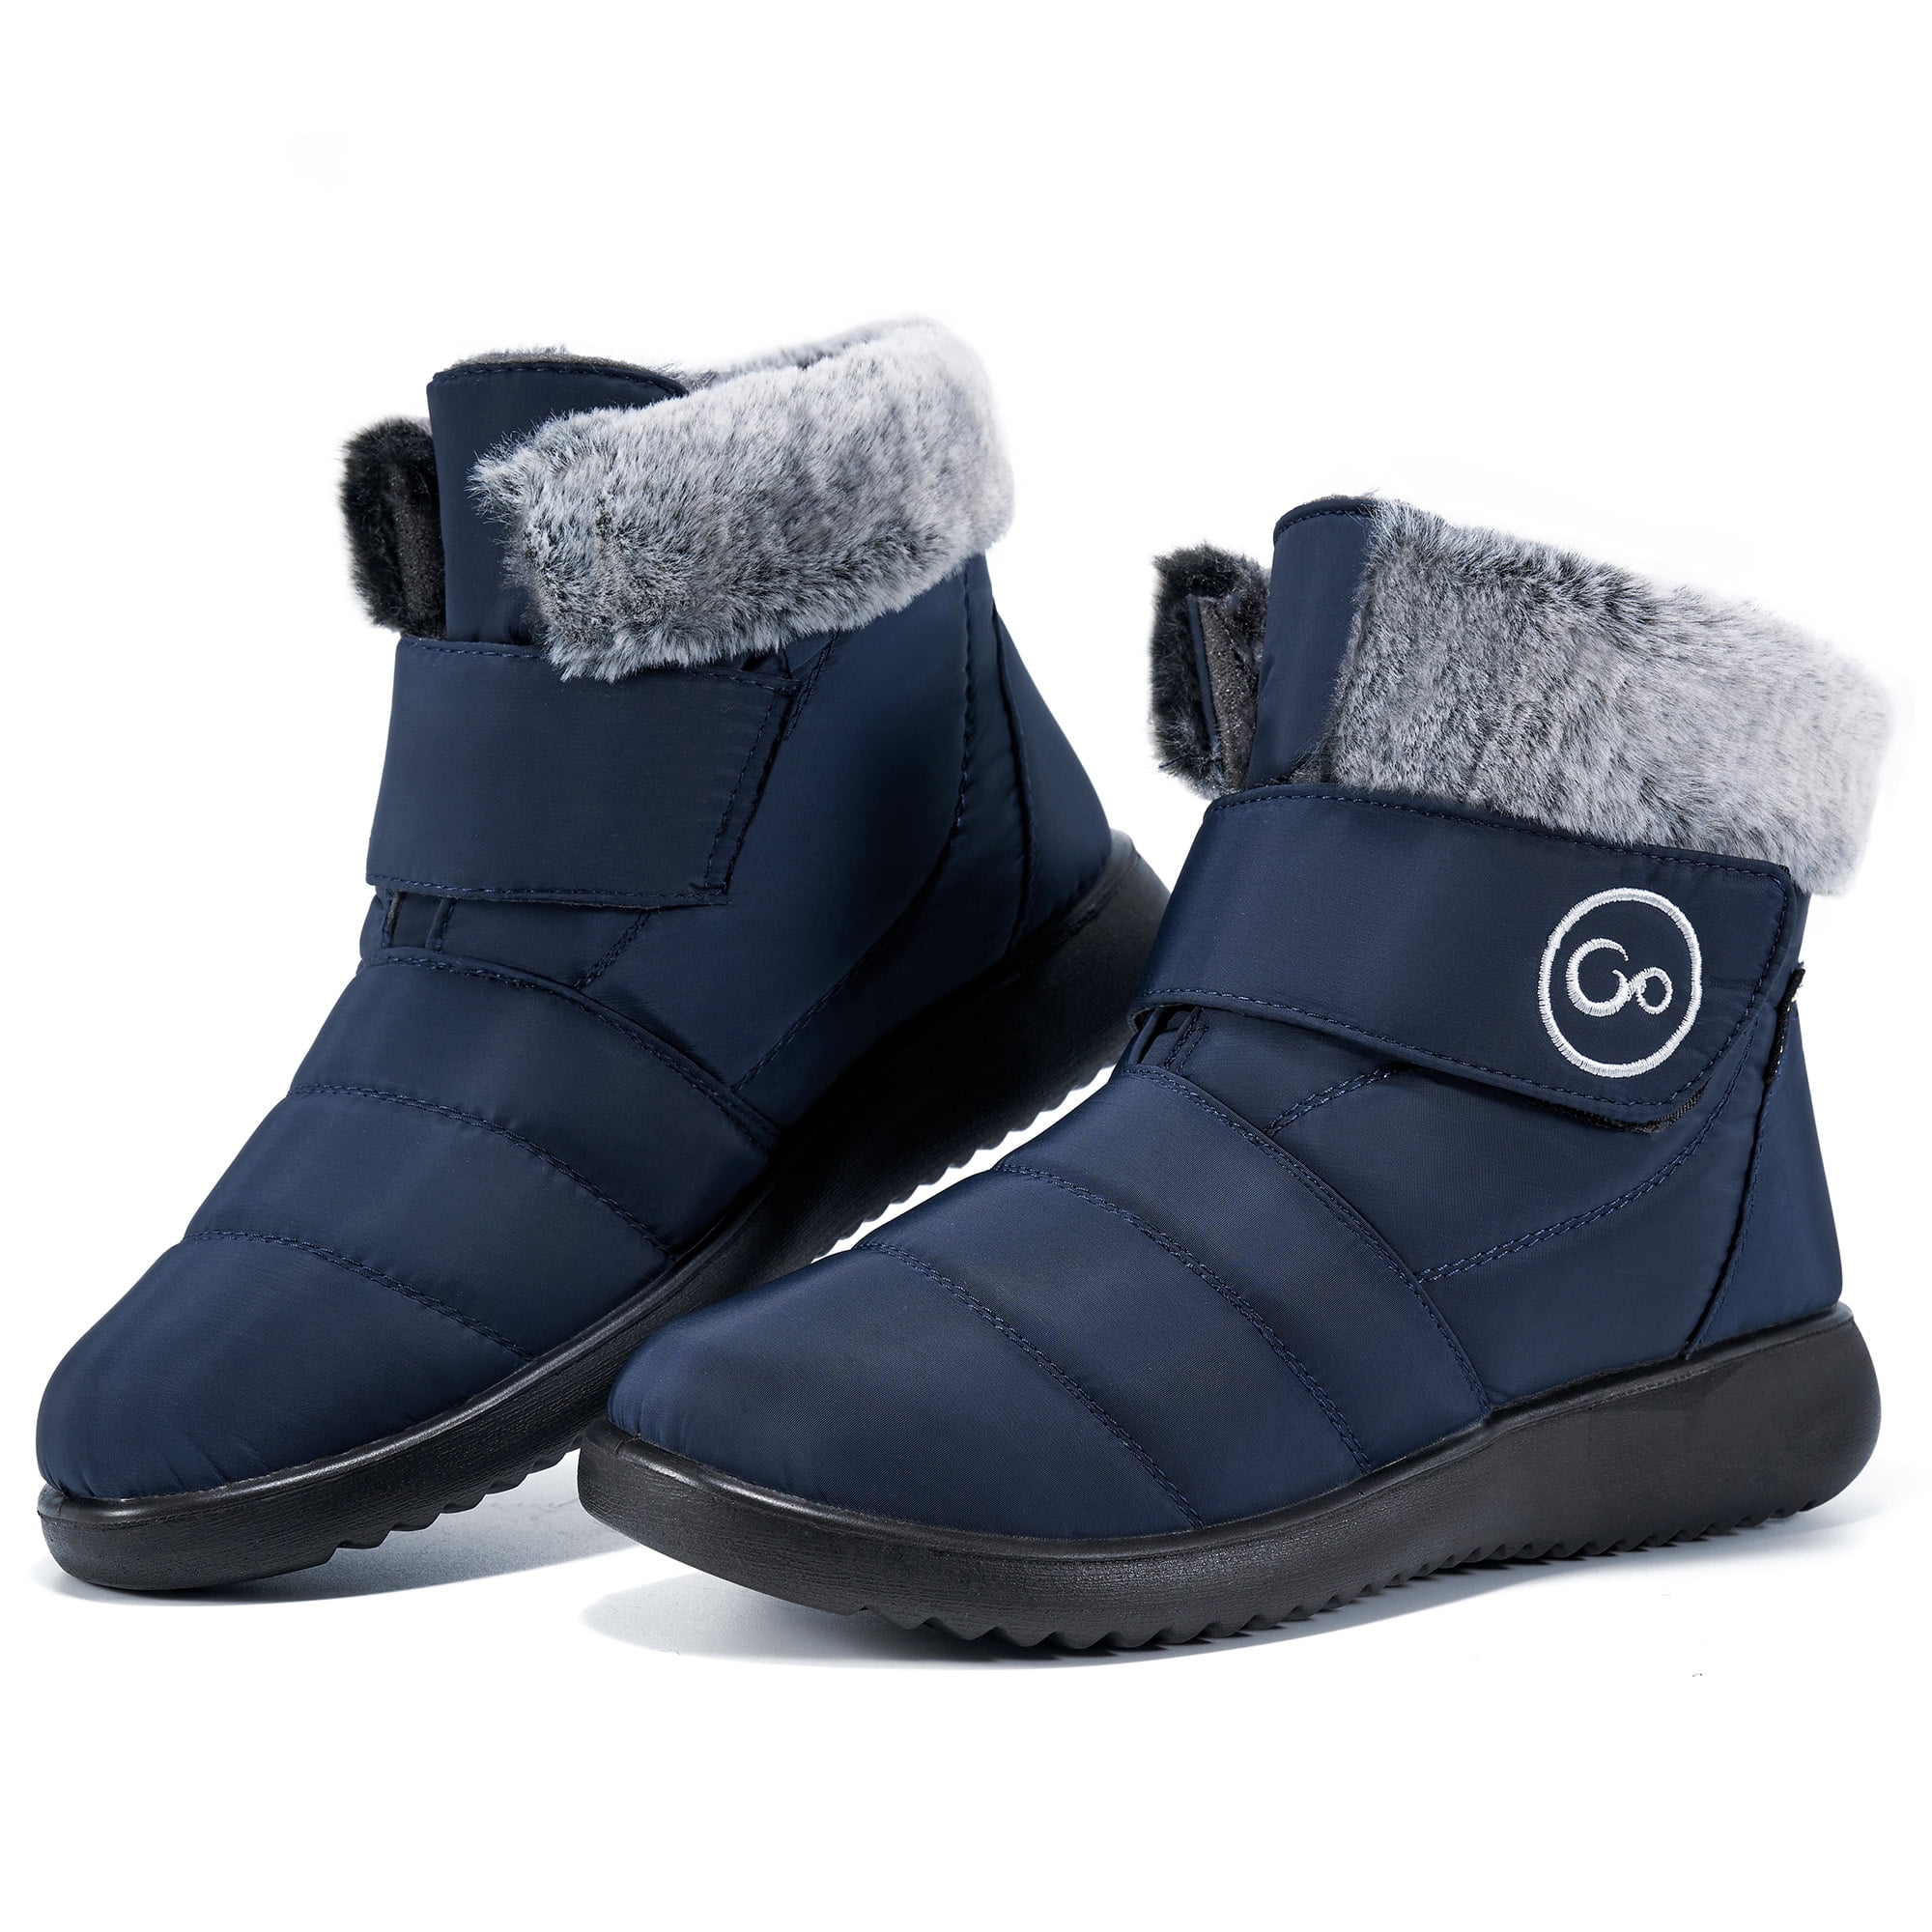 DUOYANGJIASHA Womens Snow Boots Fur Warm Ankle Booties Waterproof Comfortable Slip On Outdoor Winter Shoes Plus Size